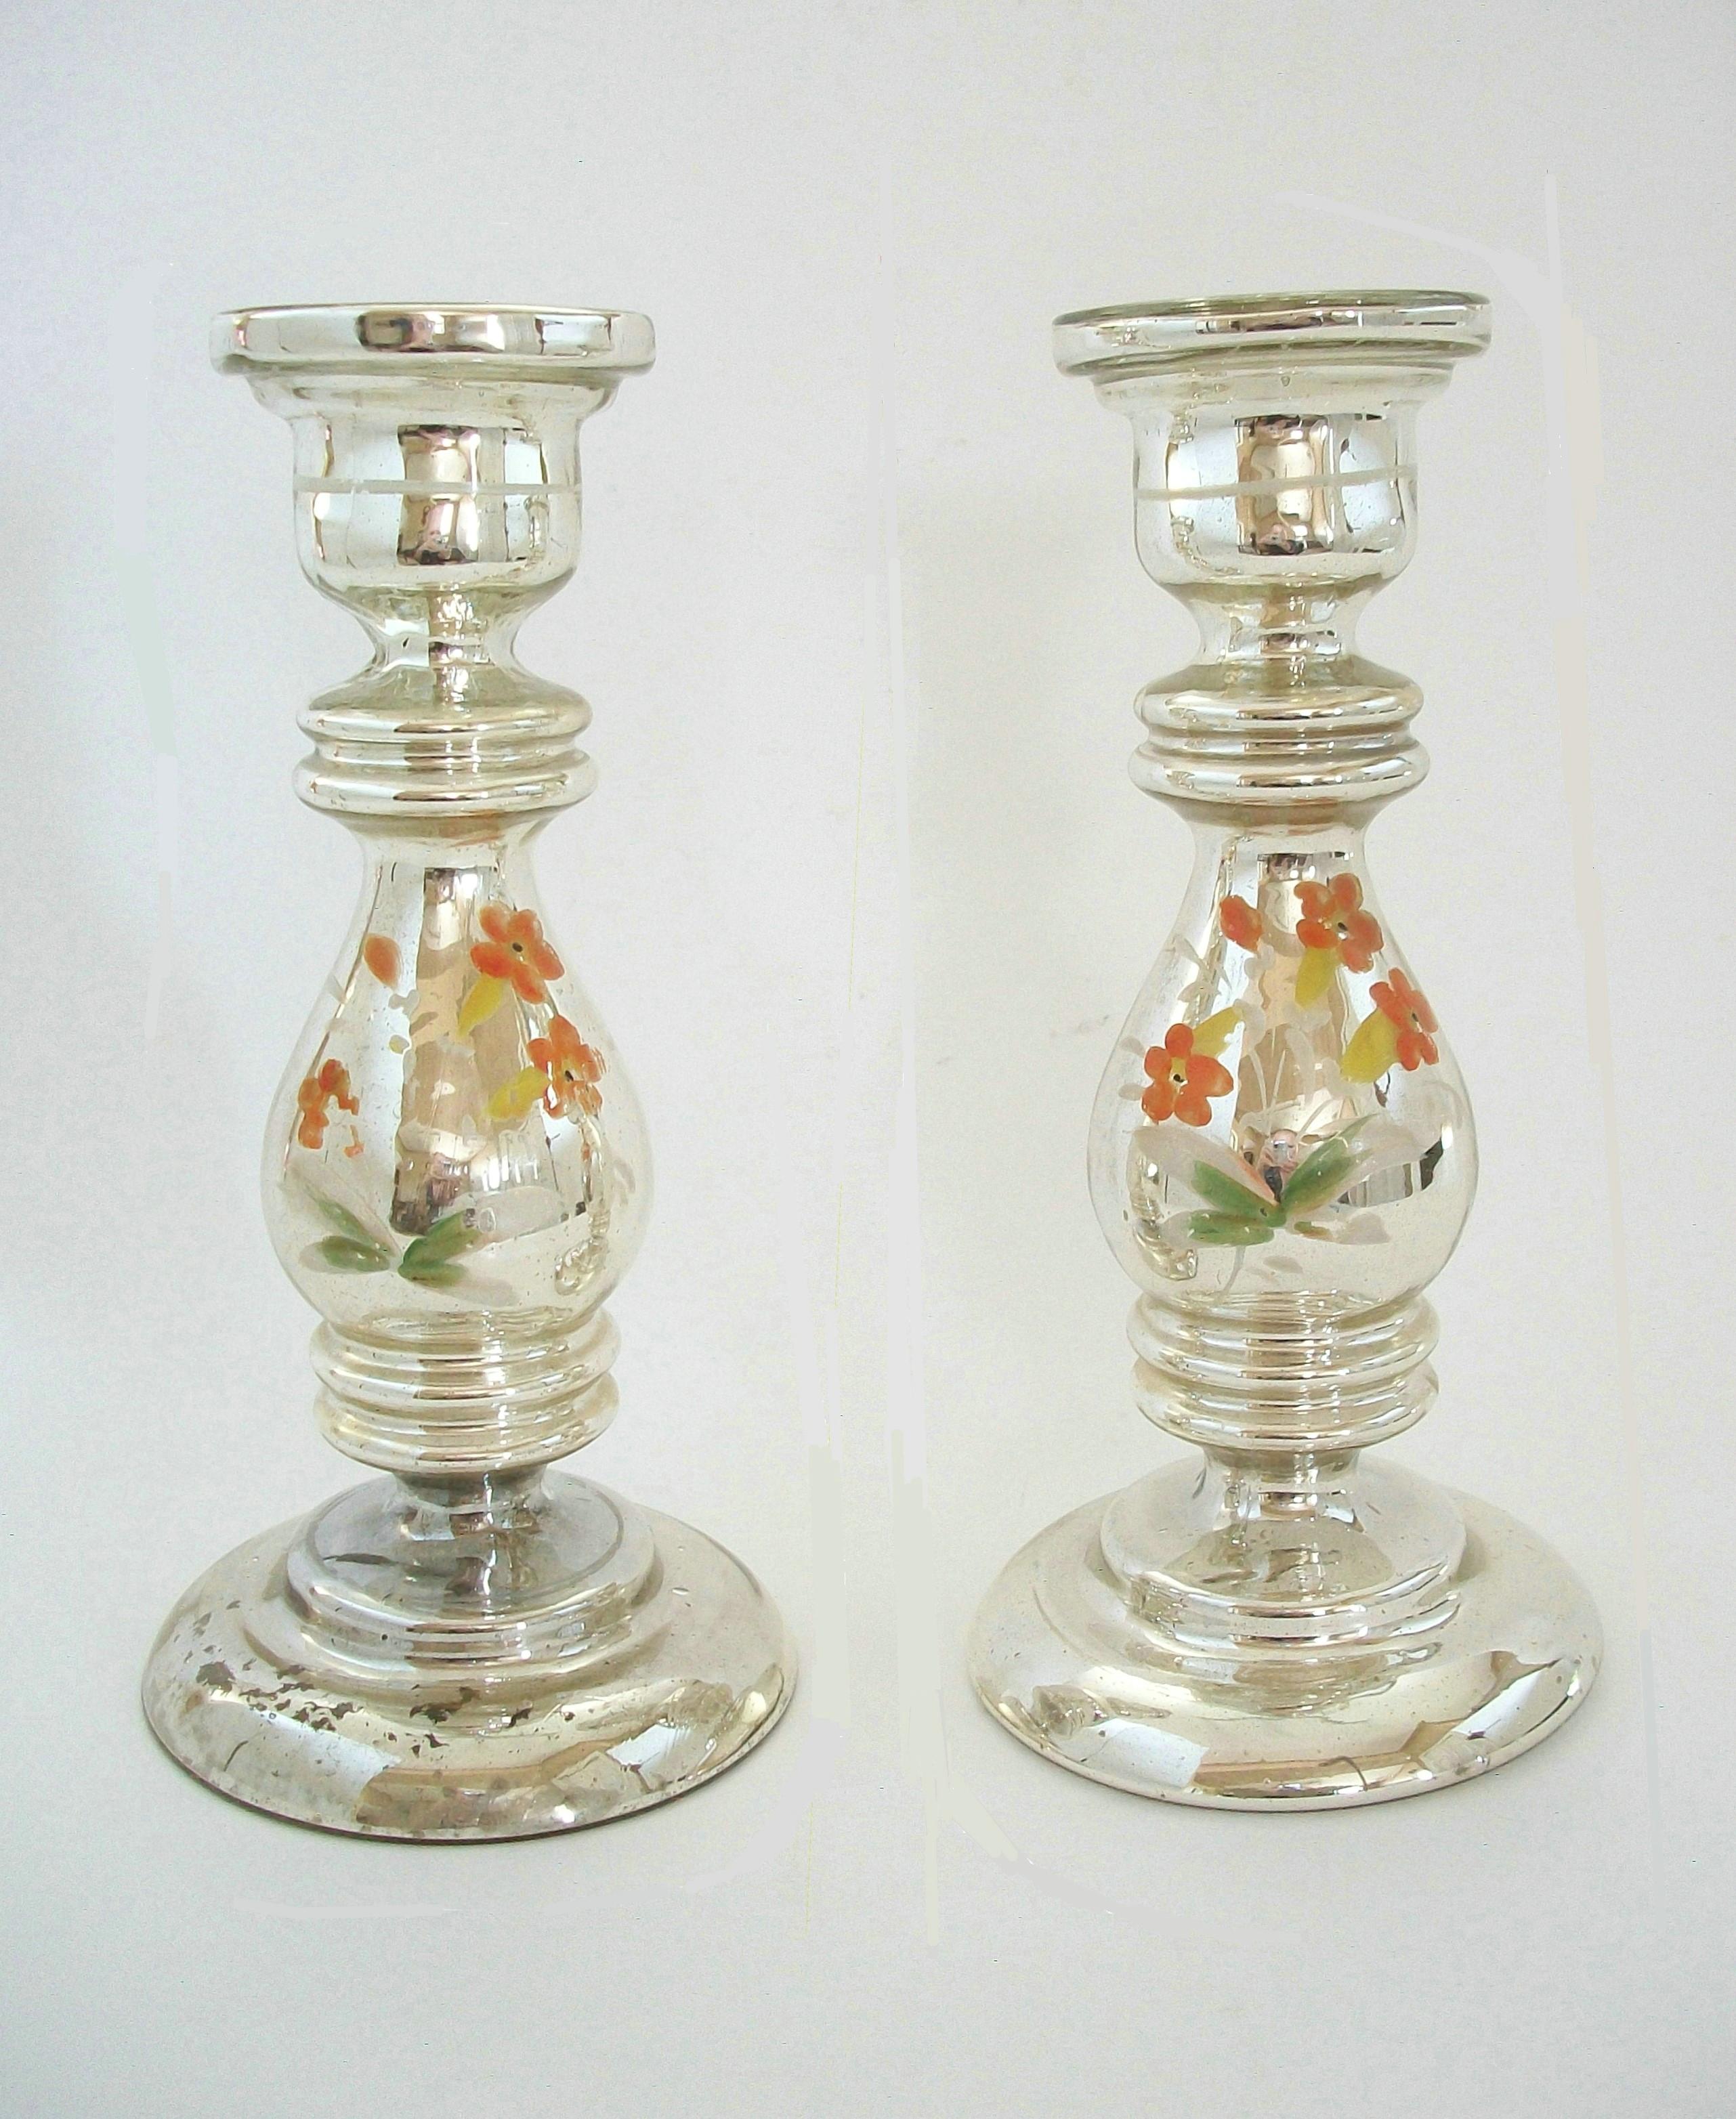 Belle Époque Antique Pair of Painted Mercury Glass Candlesticks - France - Late 19th Century